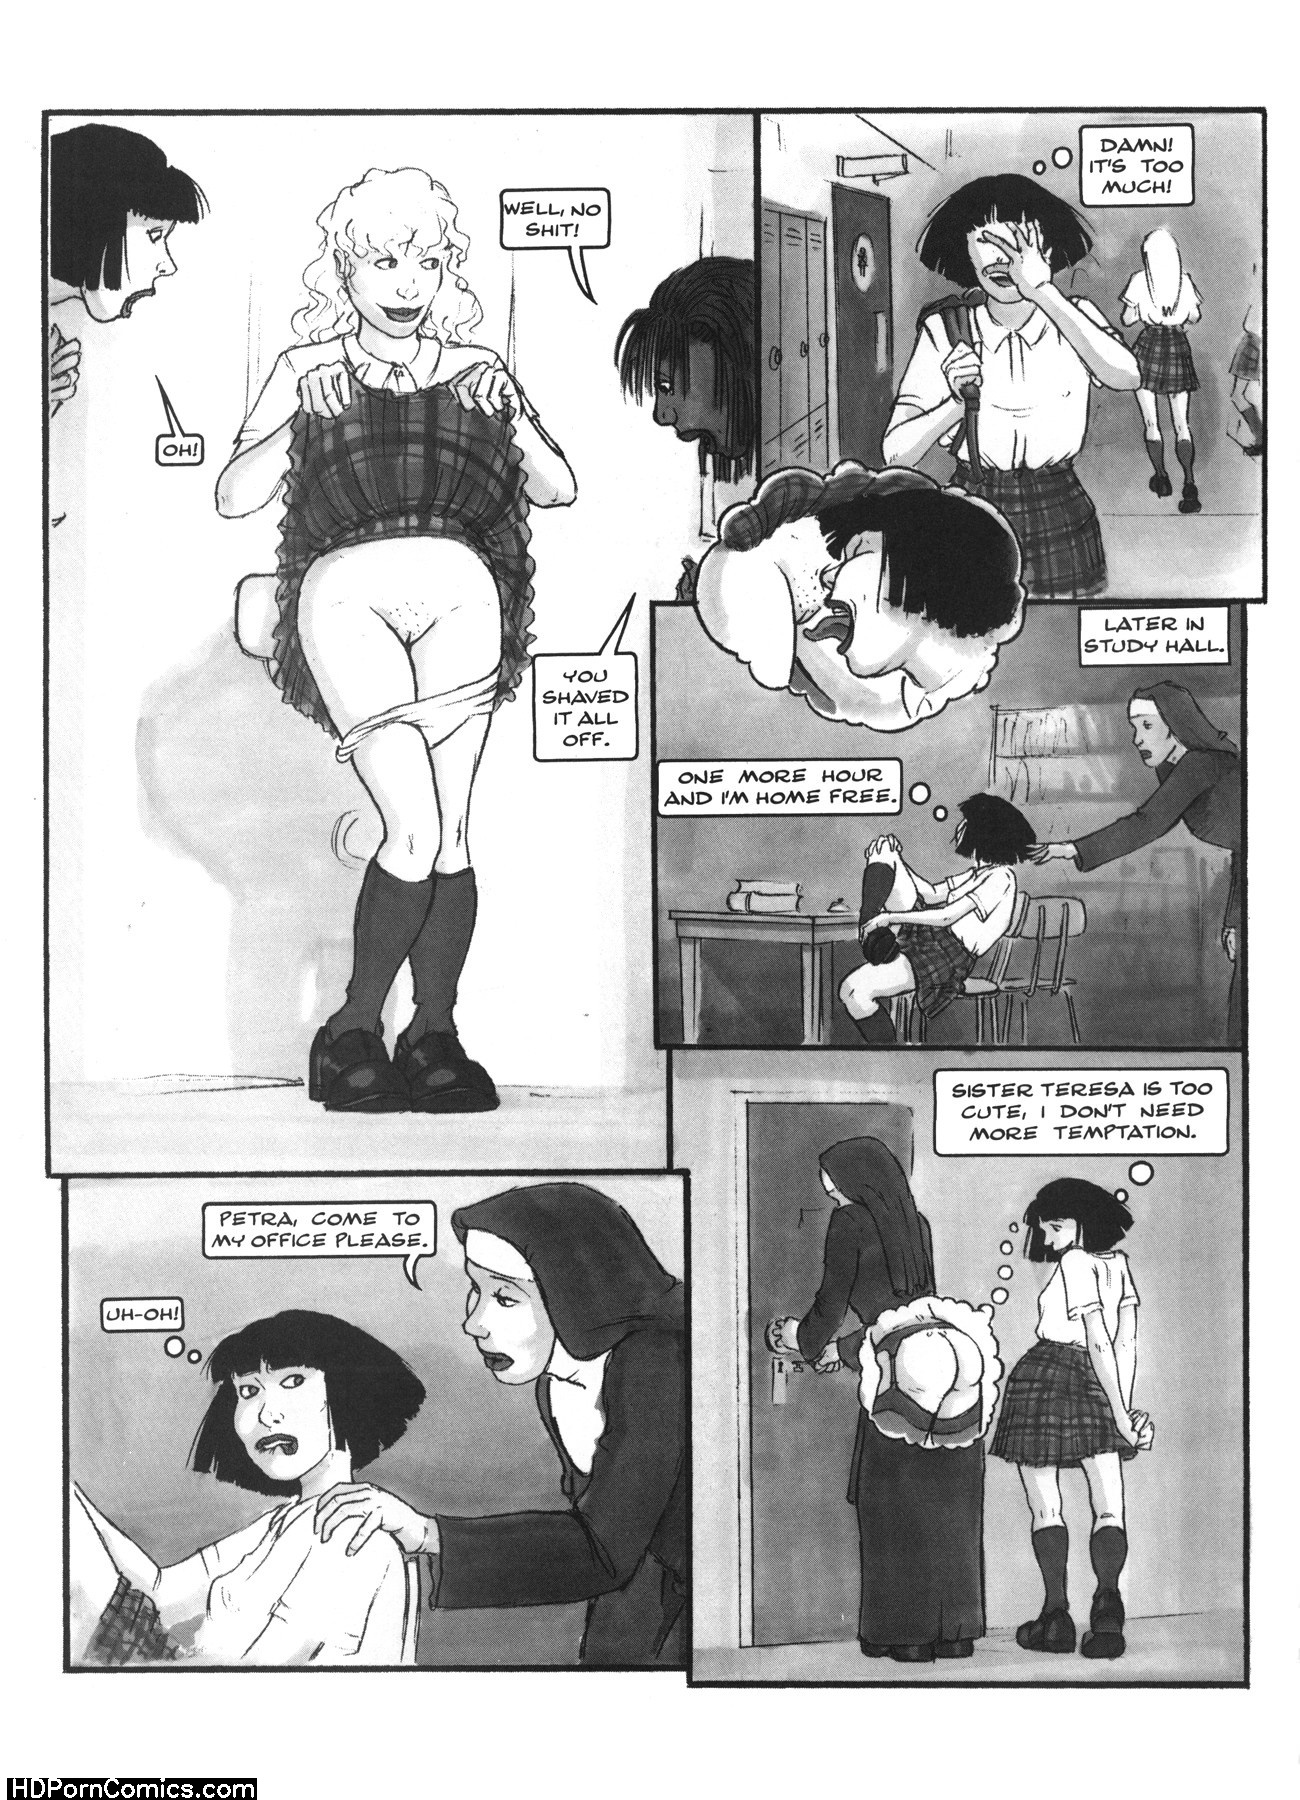 Gallery - Cartoon Porn Comics